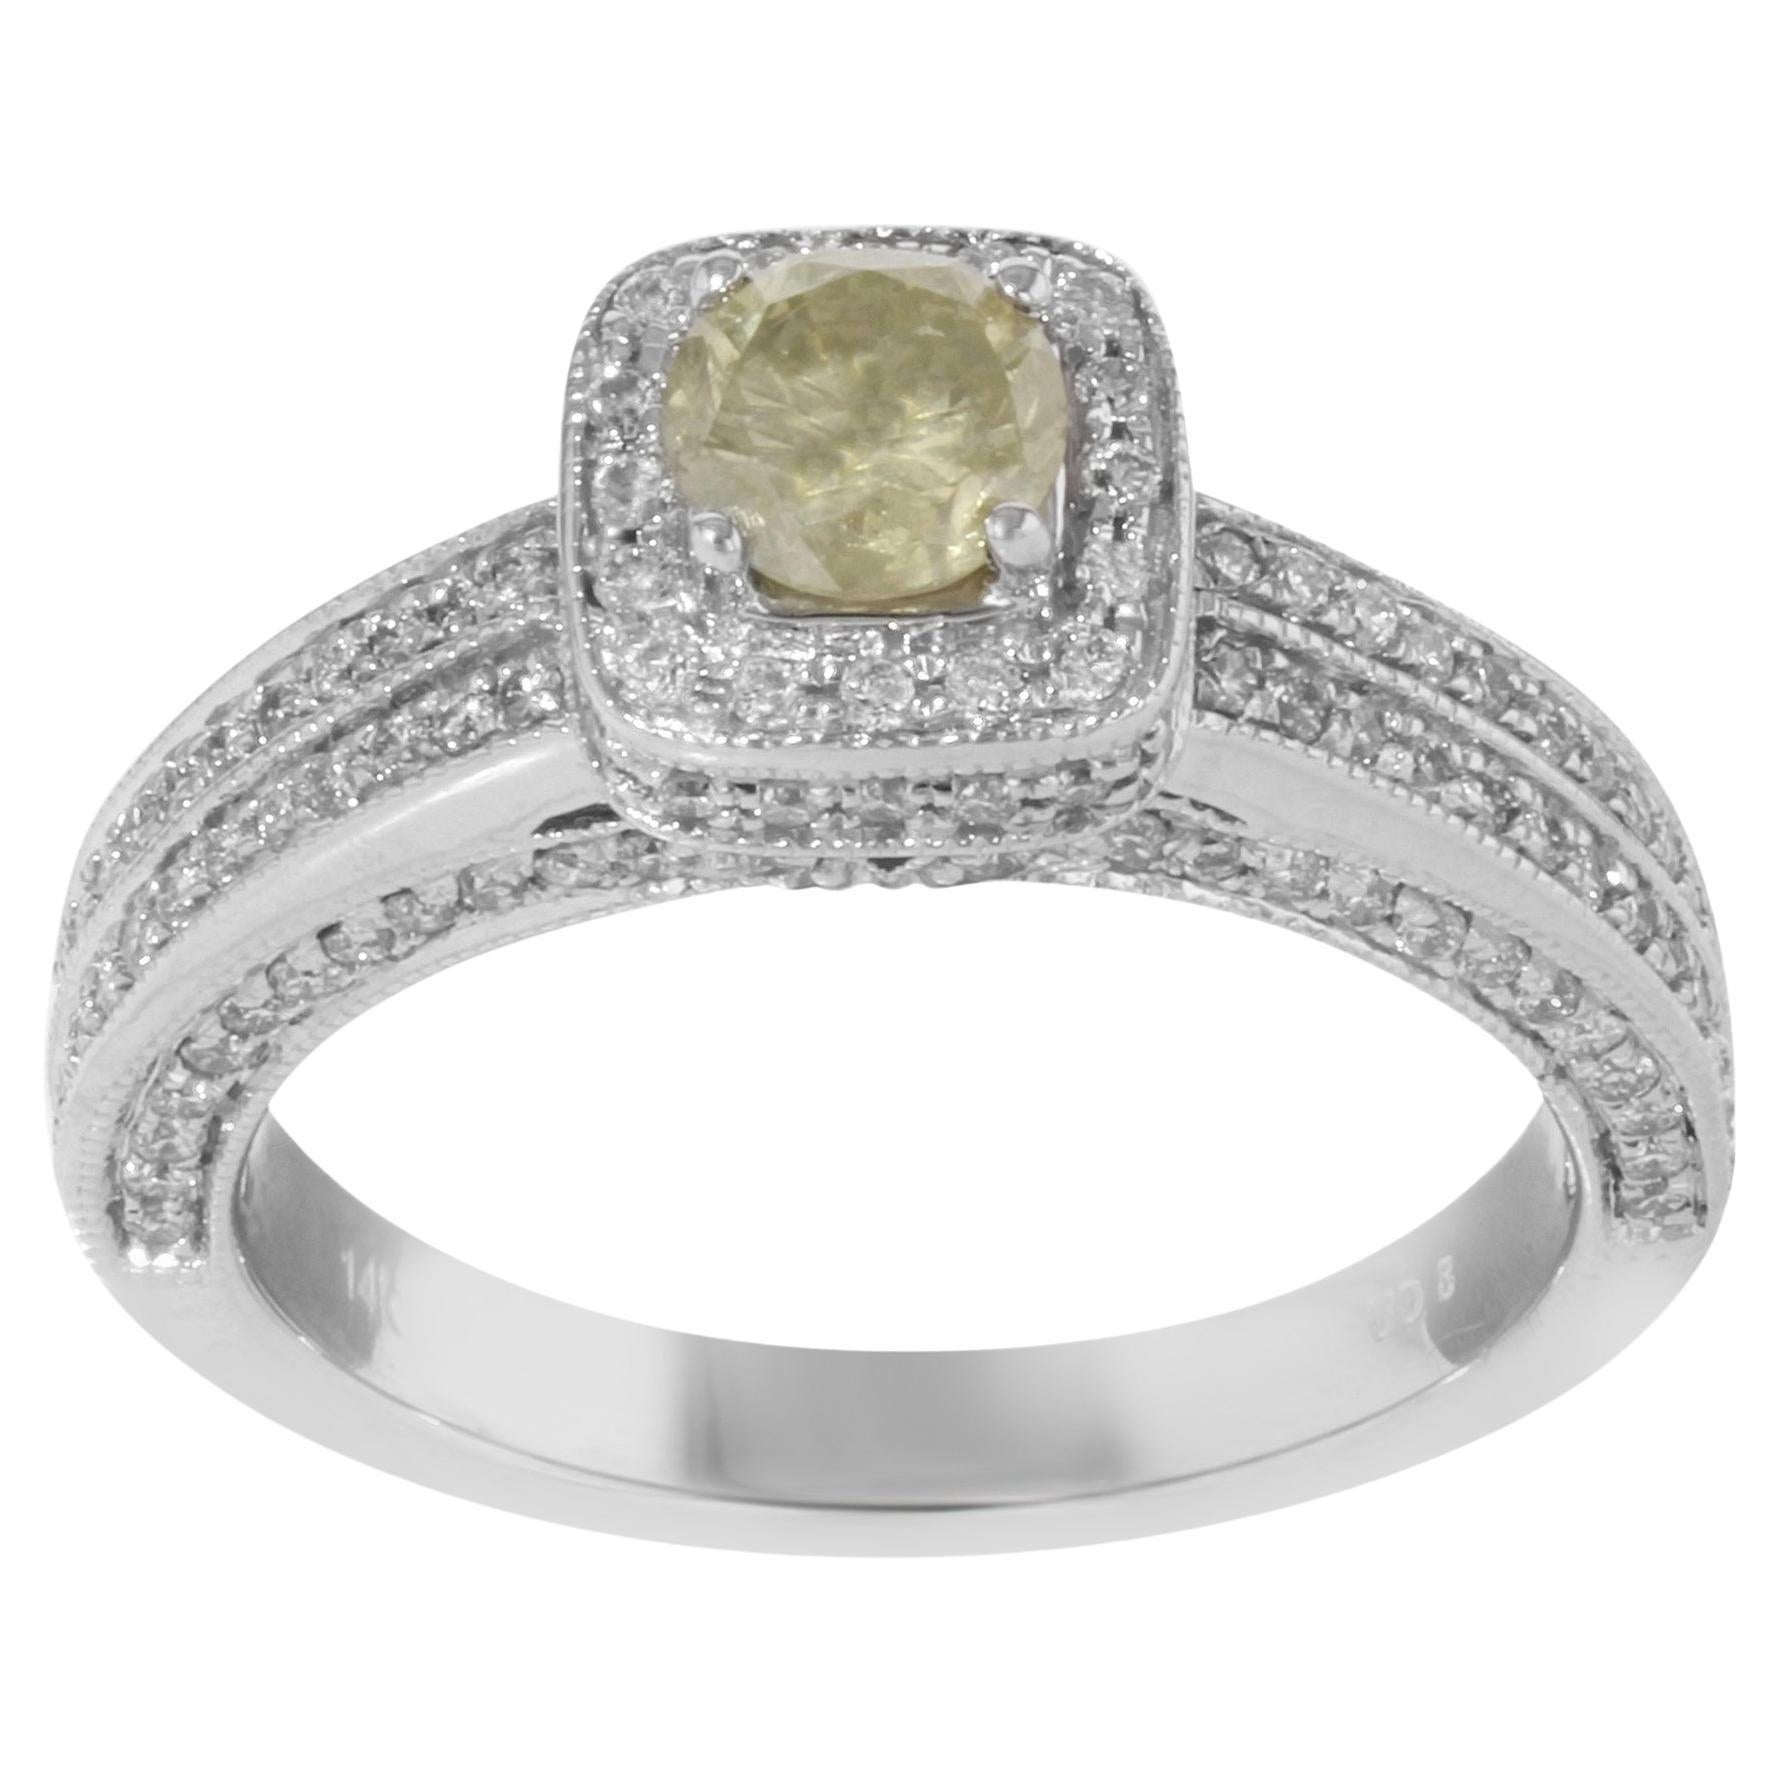 Fancy Yellow Diamond Halo Set Engagement Ring 14K White Gold 1.92 Cttw SZ 7